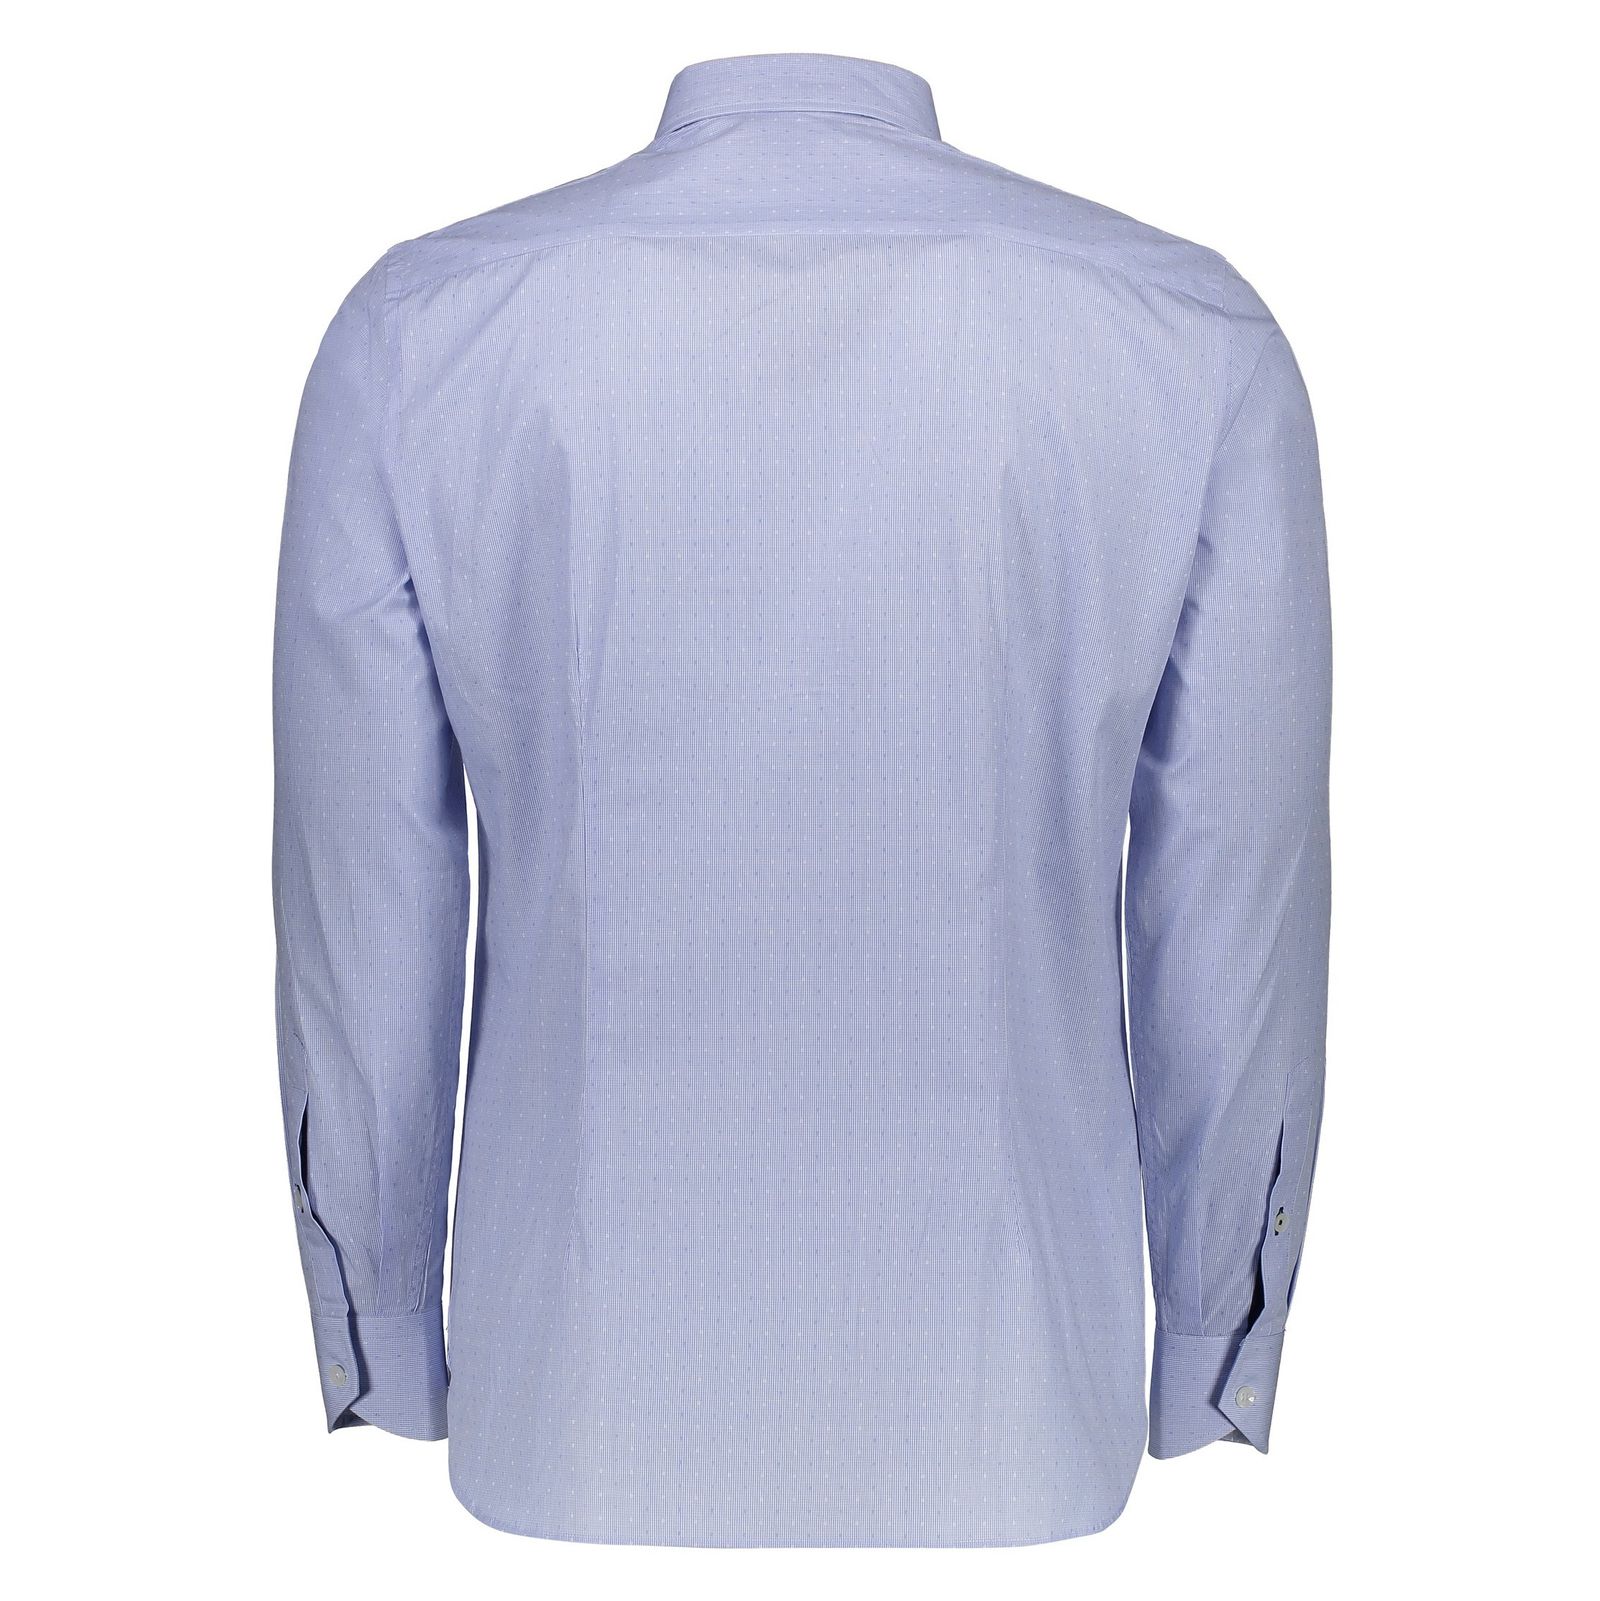 پیراهن رسمی مردانه - مانگو - آبي روشن - 3